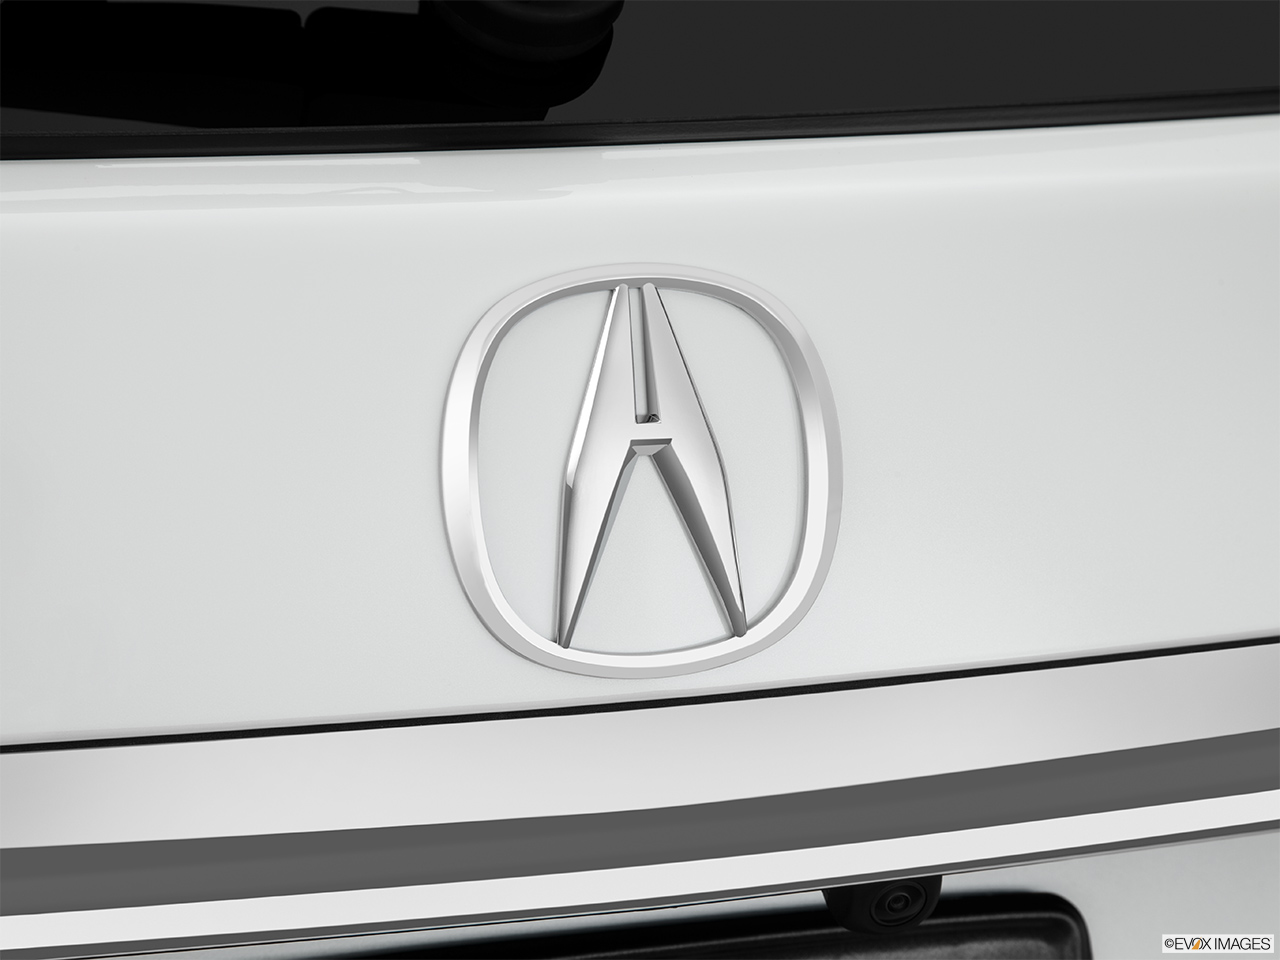 2014 Acura MDX SH-AWD Rear manufacture badge/emblem 